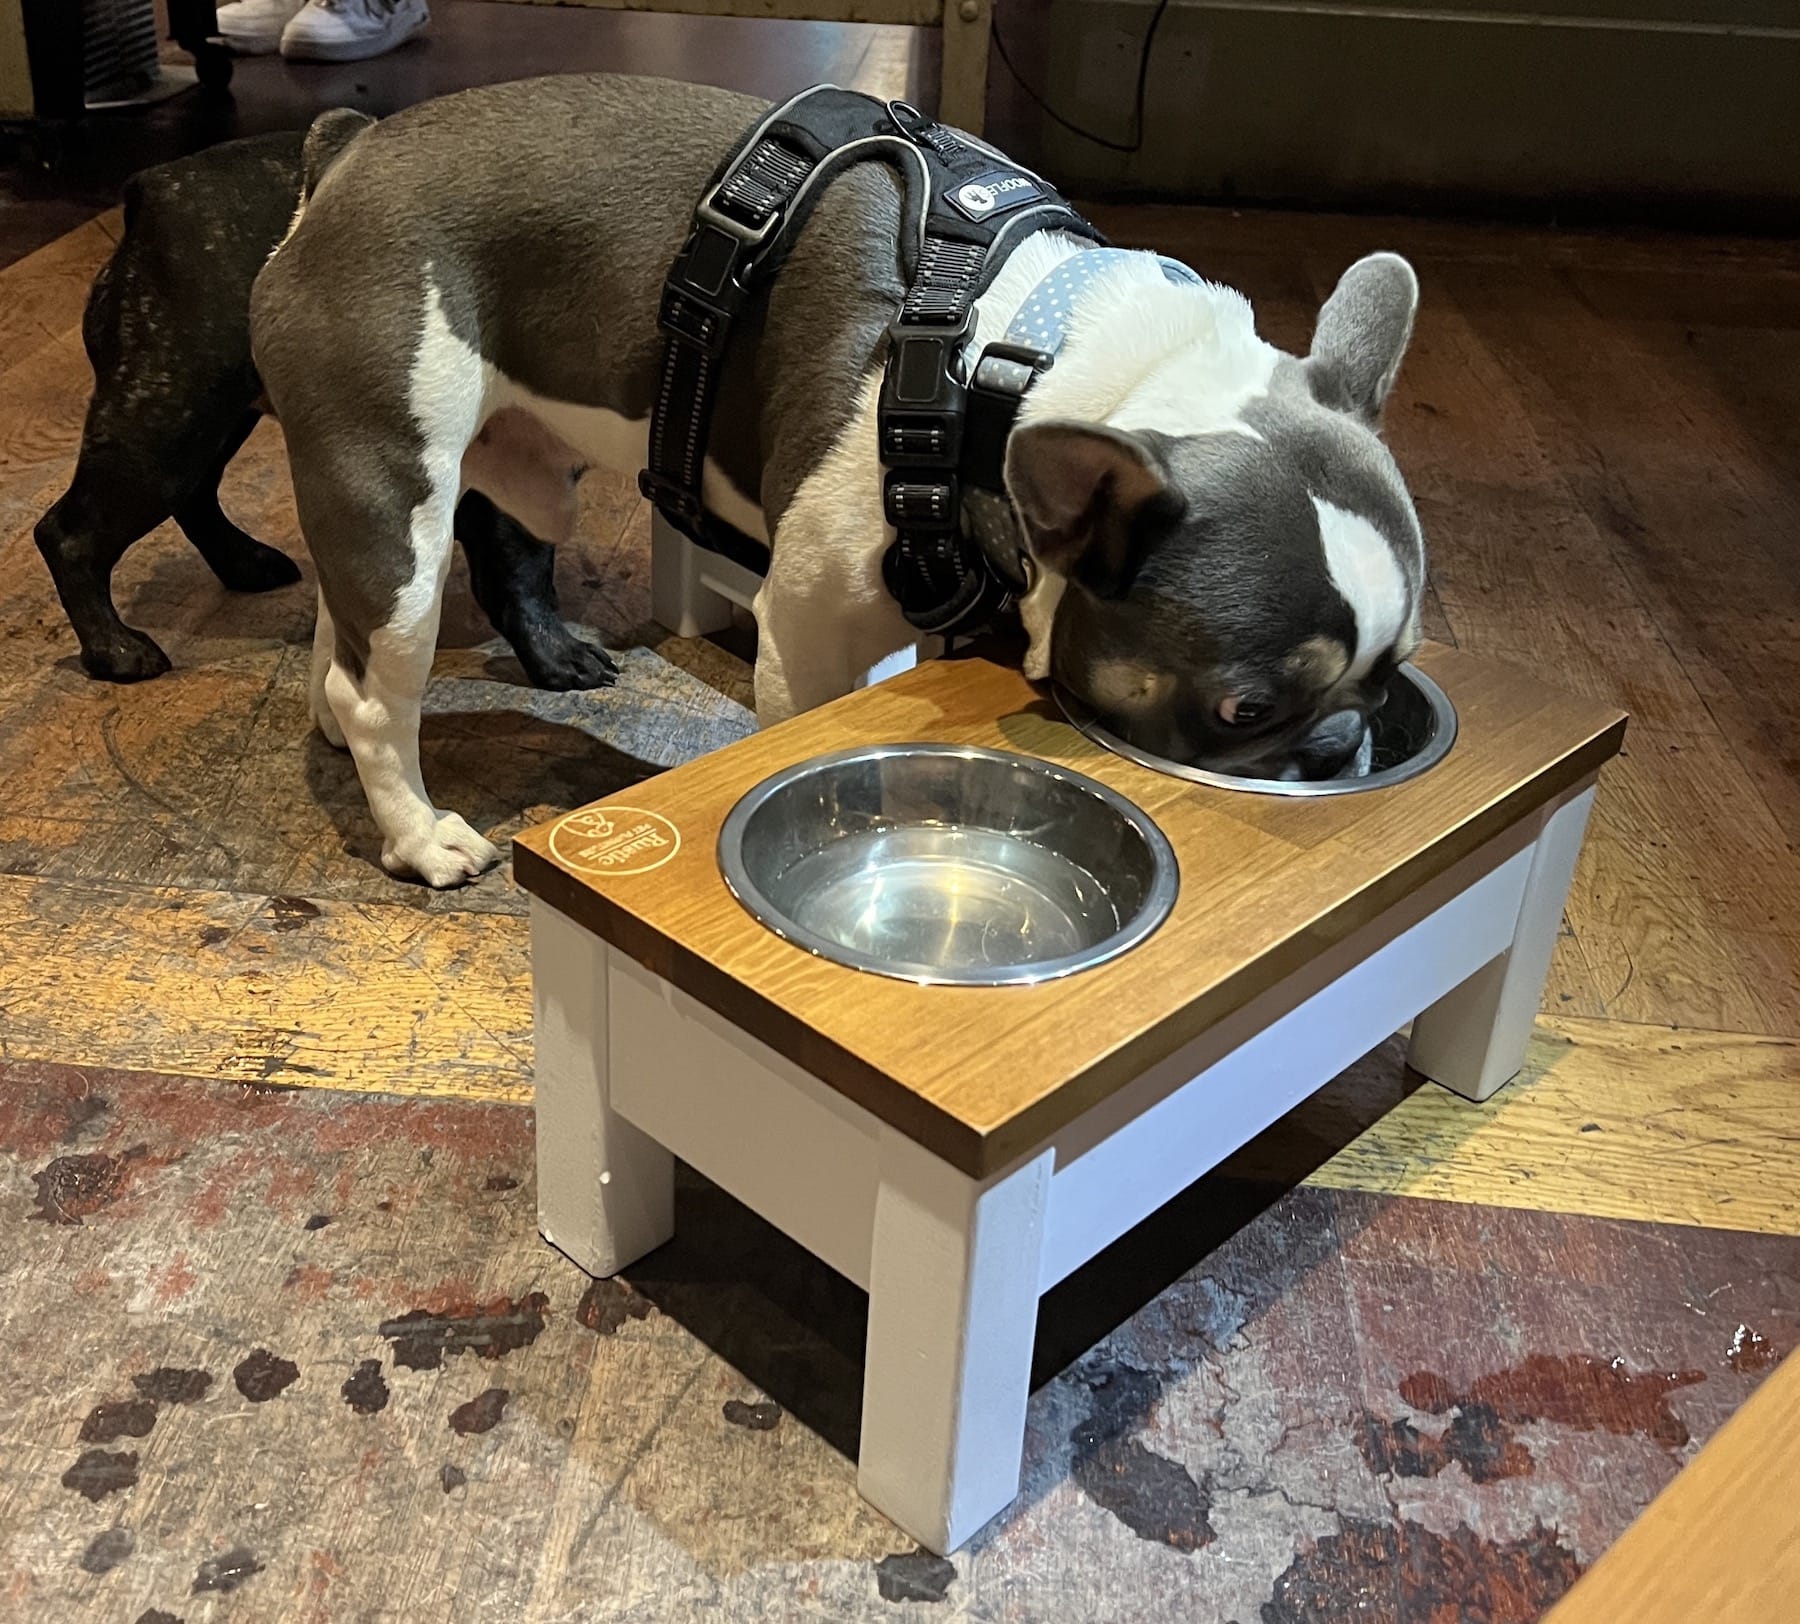 Buy Luxury Wooden Raised Dog Bowls Feeding Table, Rustic Pet Furniture